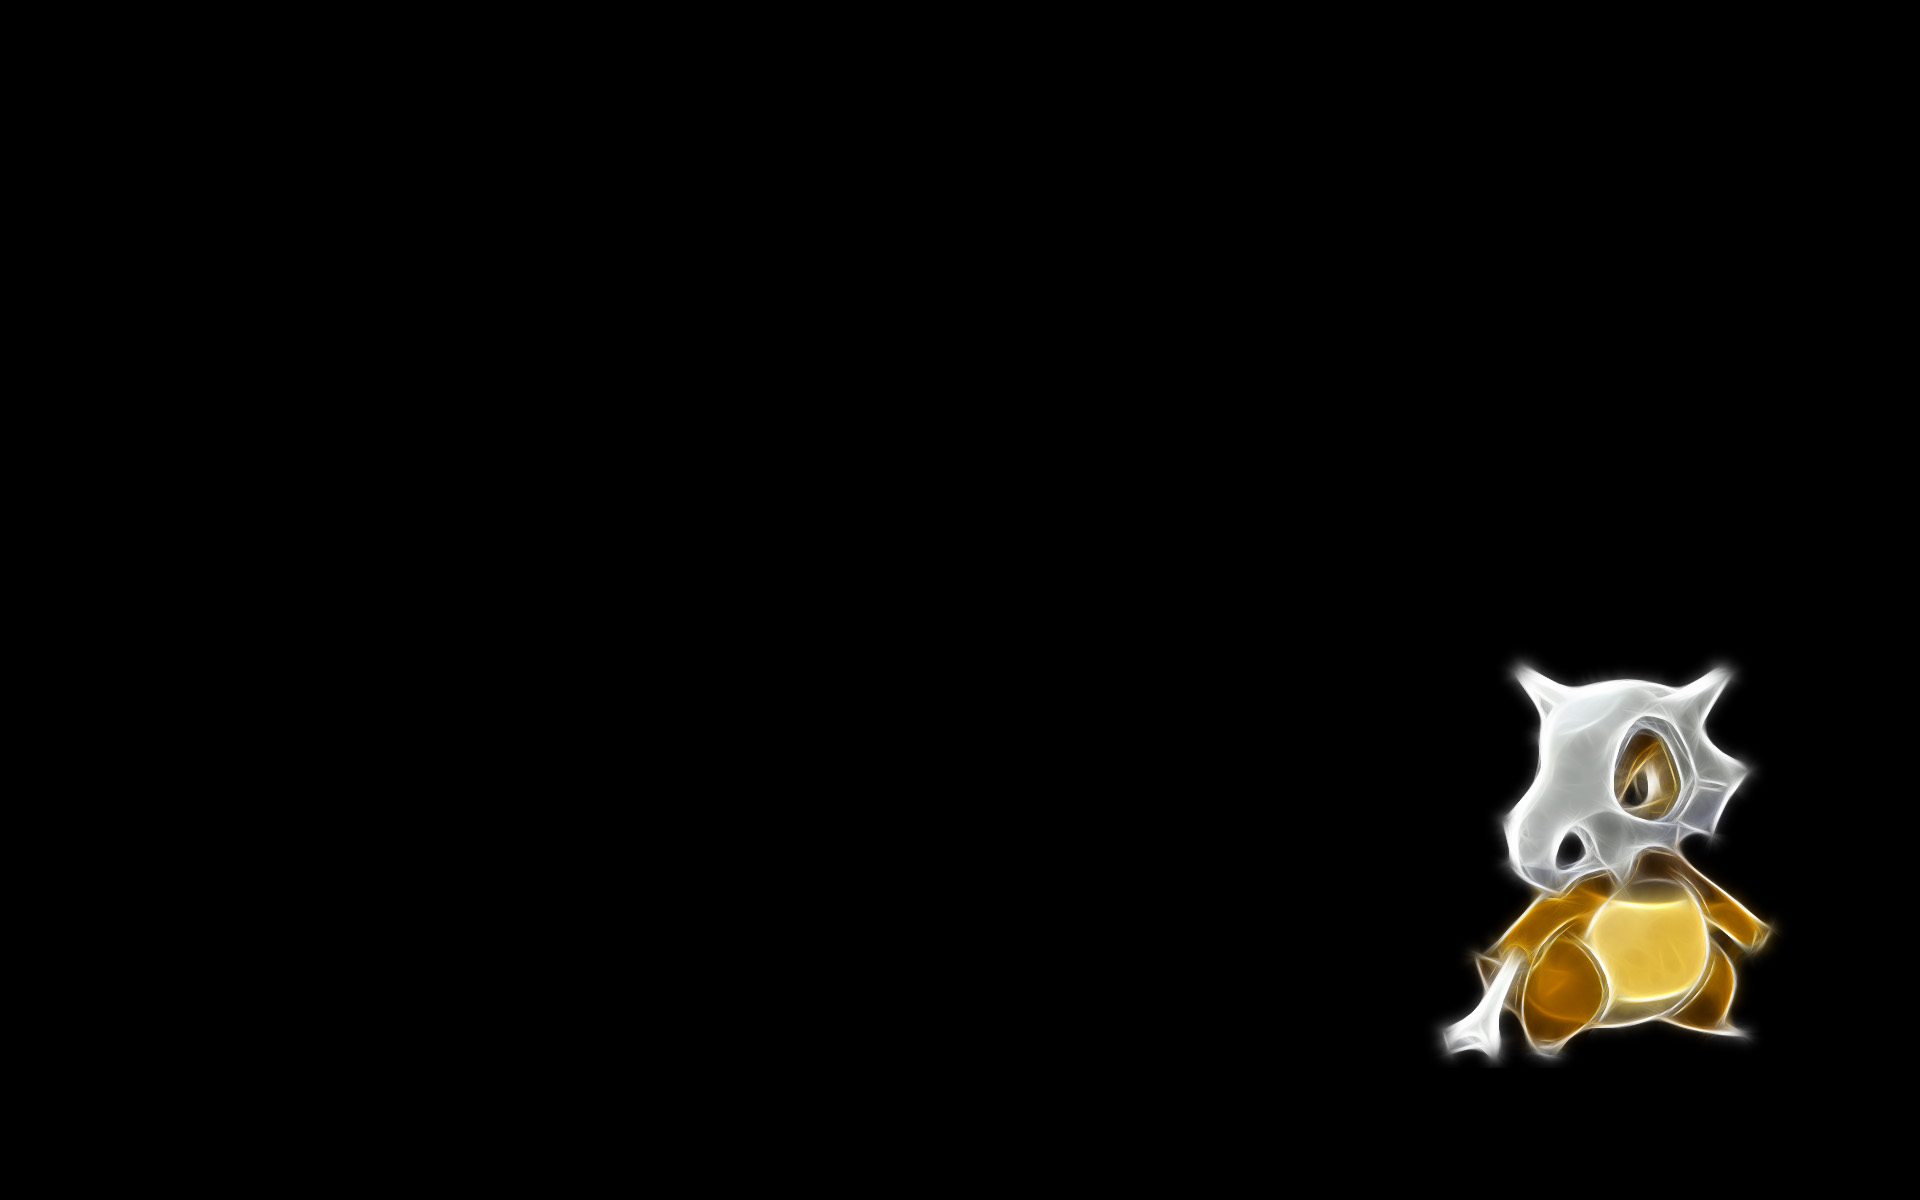 Cubone, a ground Pokémon from the anime Pokémon, featured in a desktop wallpaper.